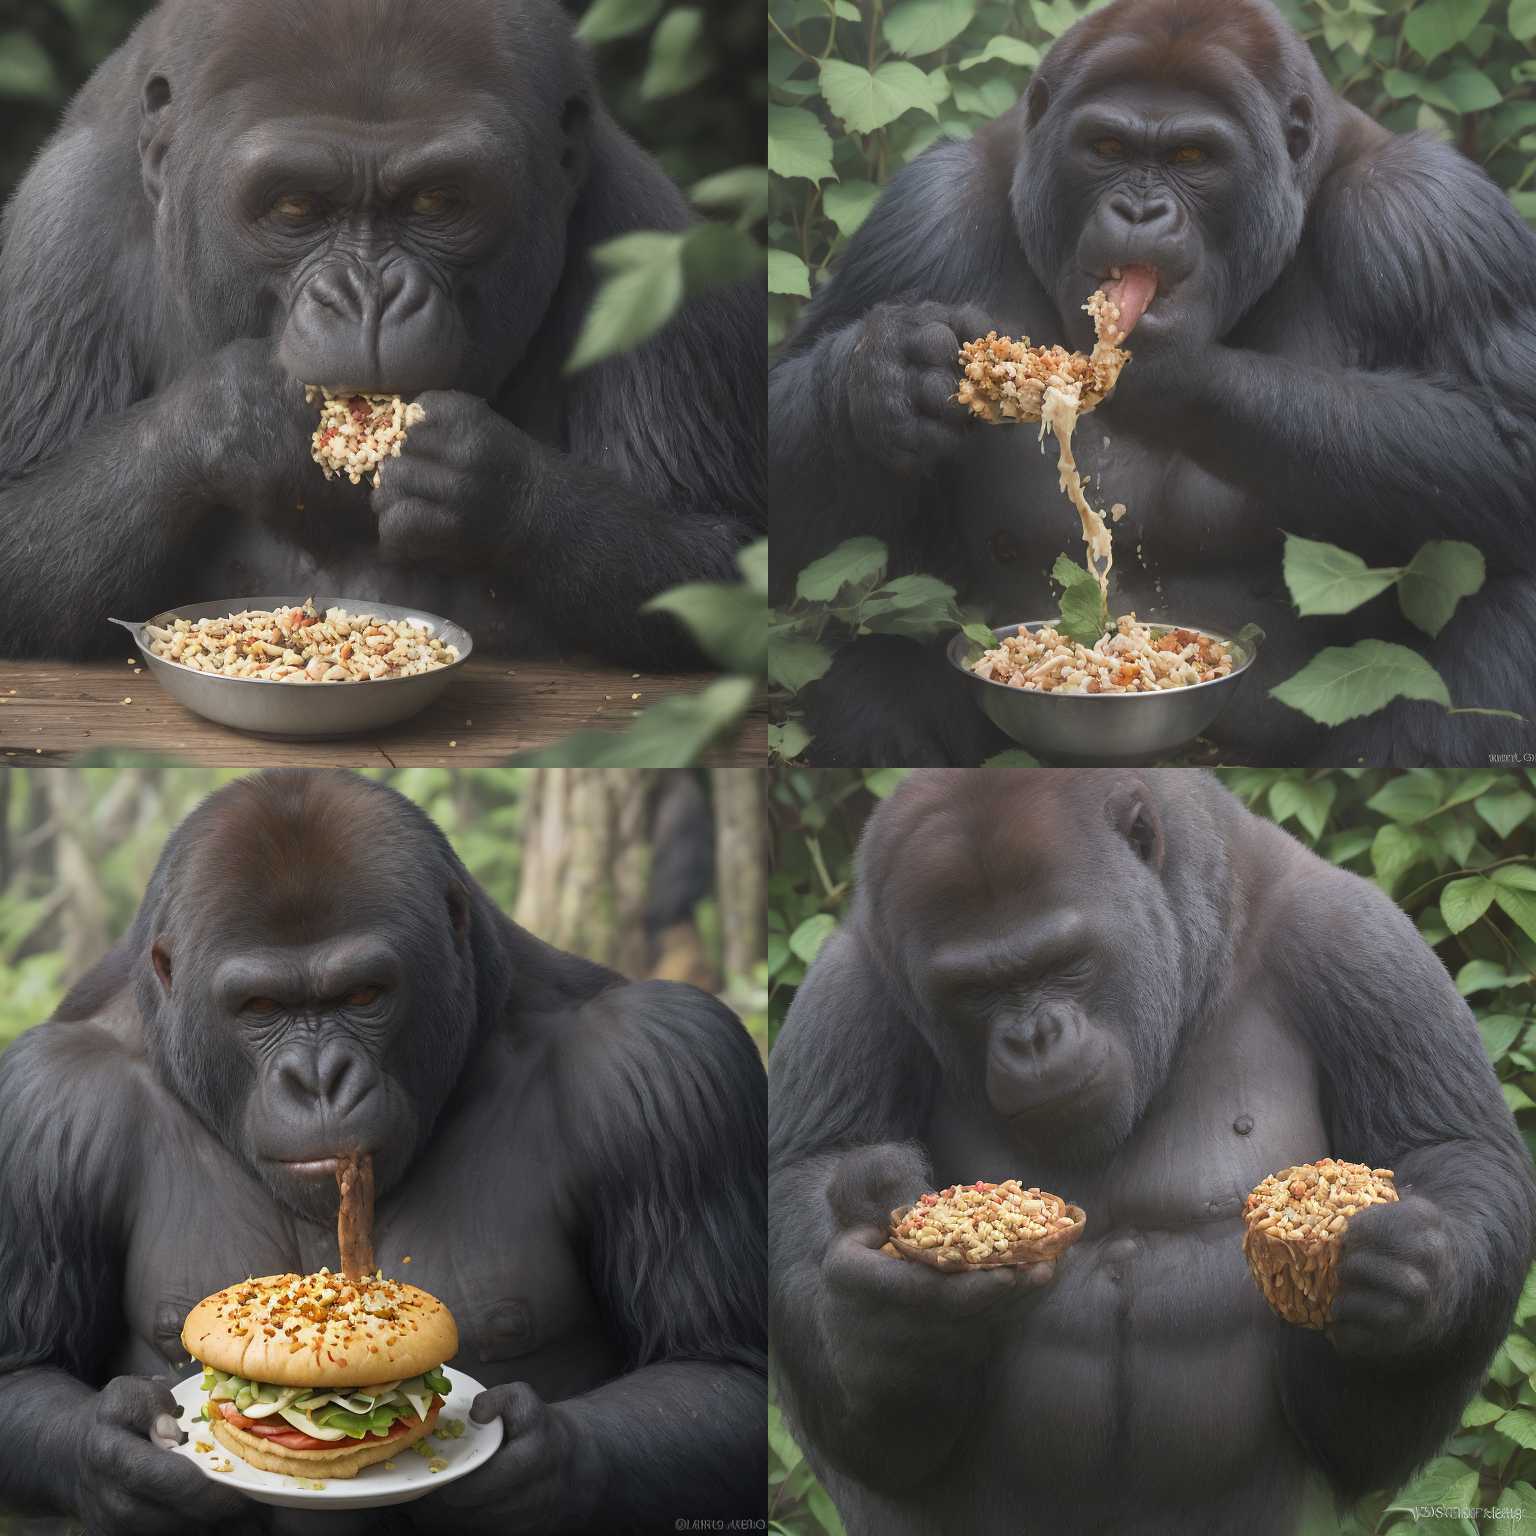 An eating gorilla